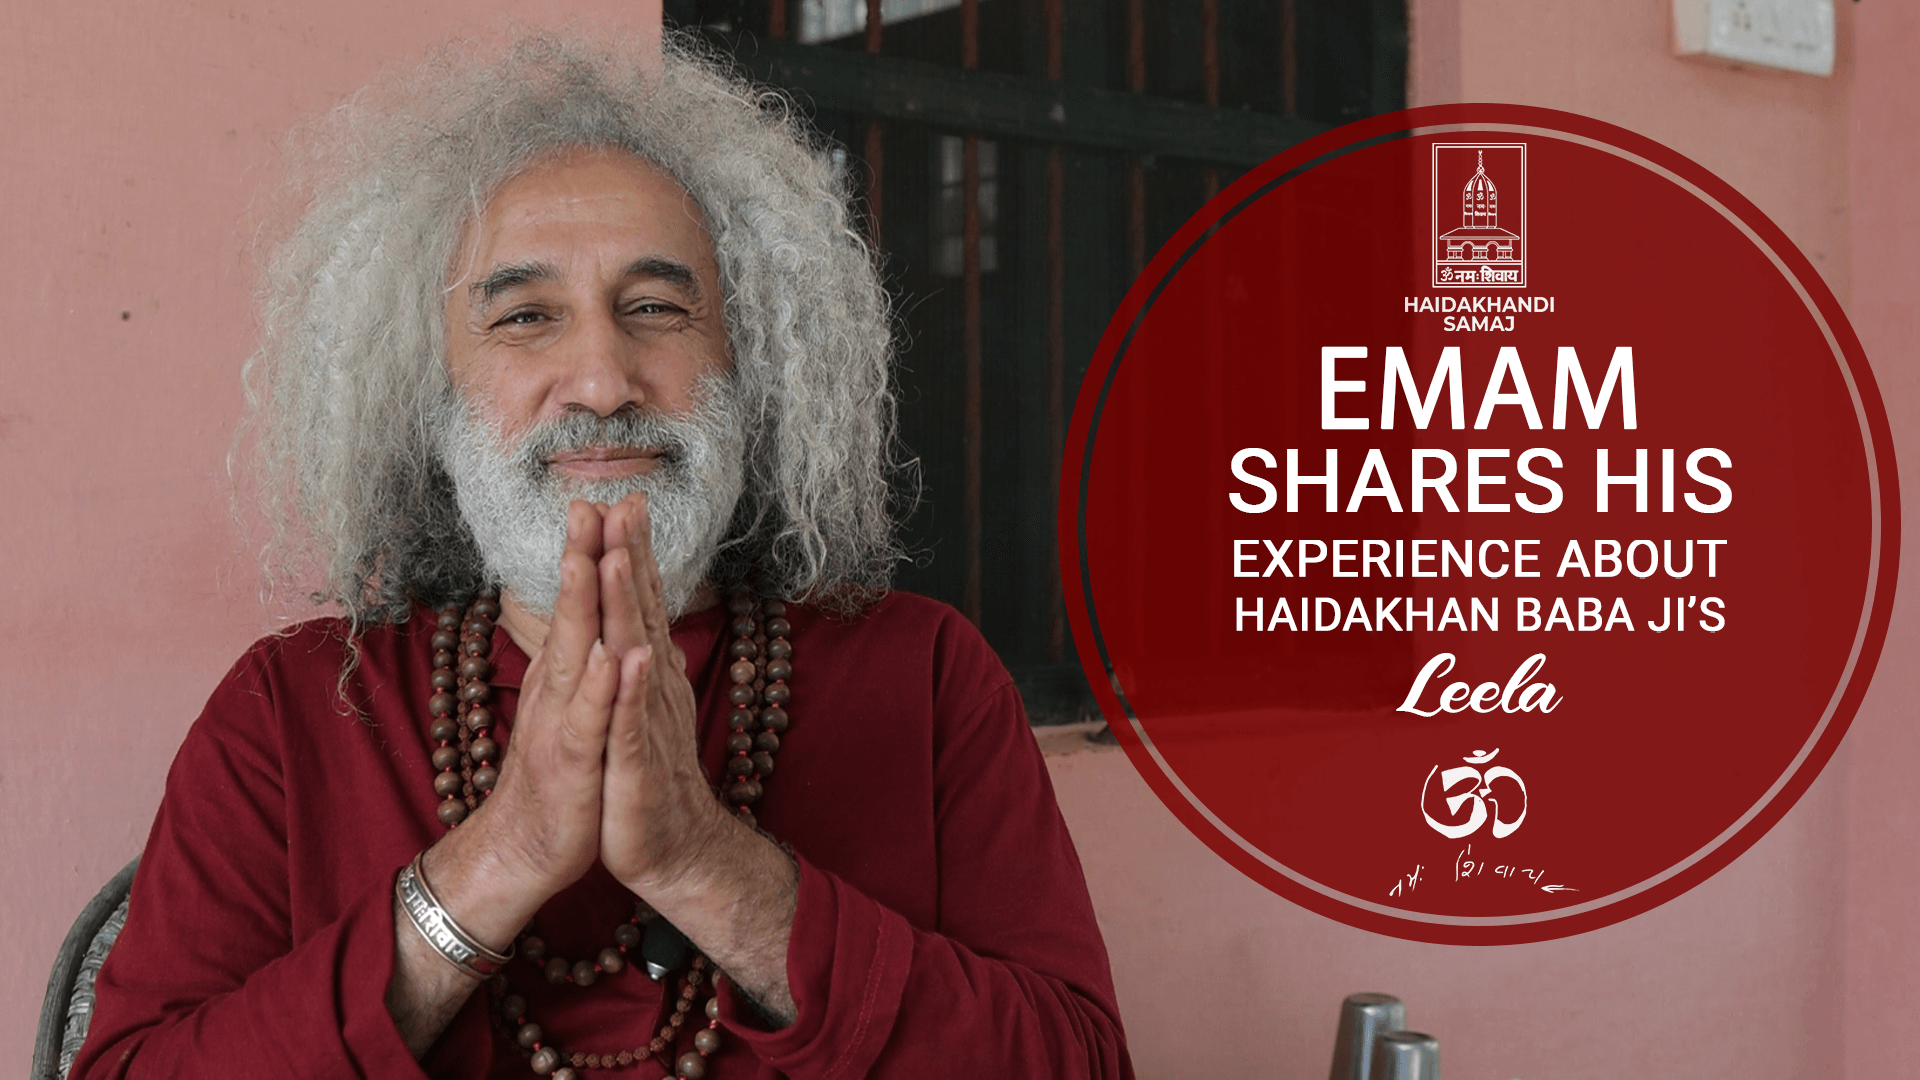 Emam - Devotee of Haidakhan Babaji shares his experience